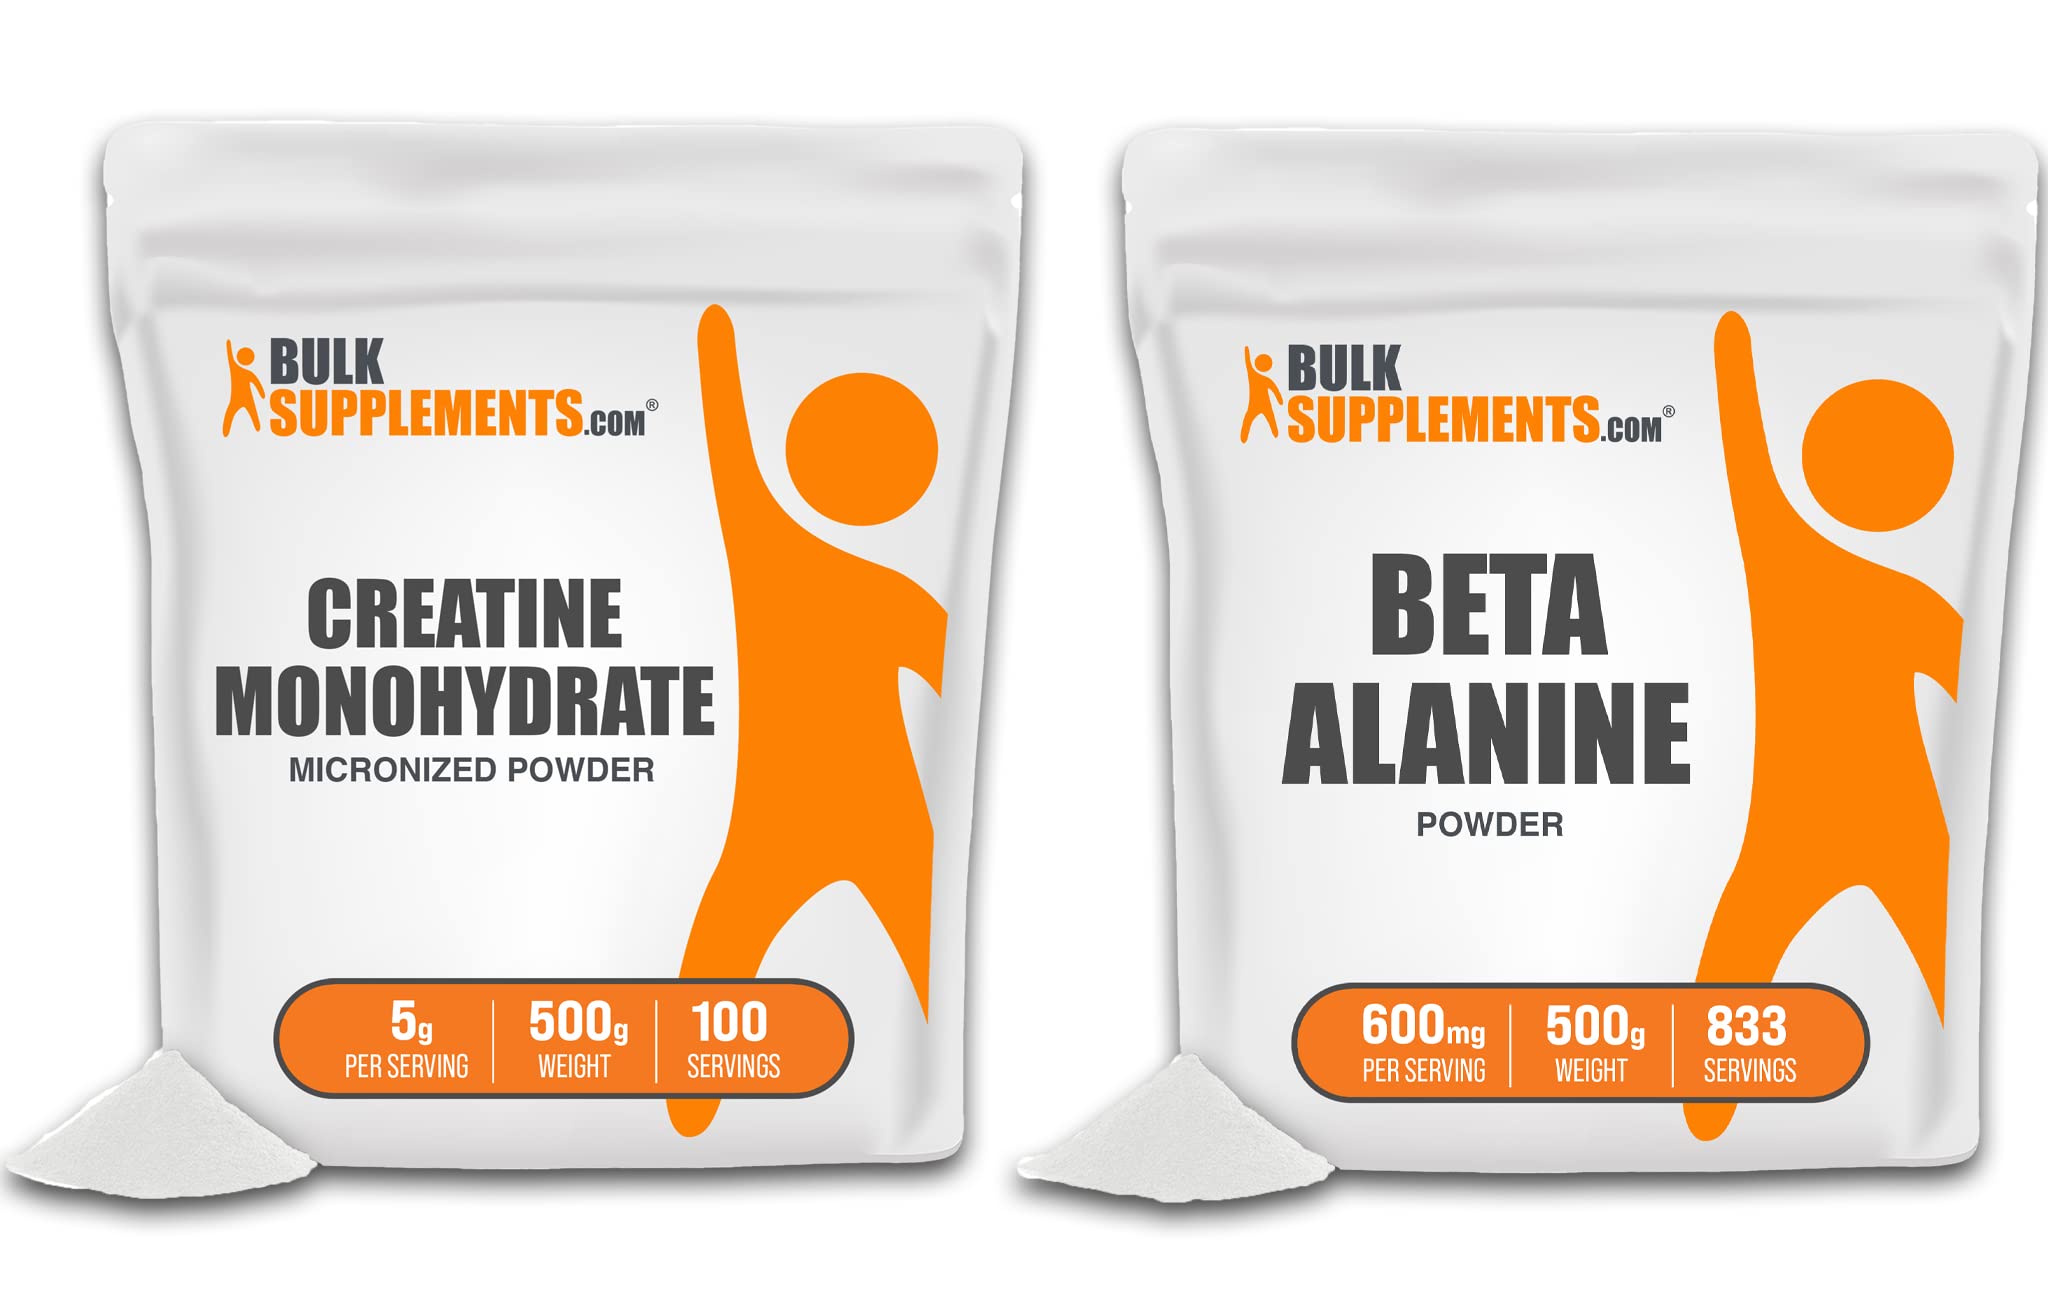 BULKSUPPLEMENTS.COM Creatine Monohydrate Powder (Micronized), 500g with Beta Alanine Powder, 500g - Unflavored, Gluten Free, No Fillers Bundle